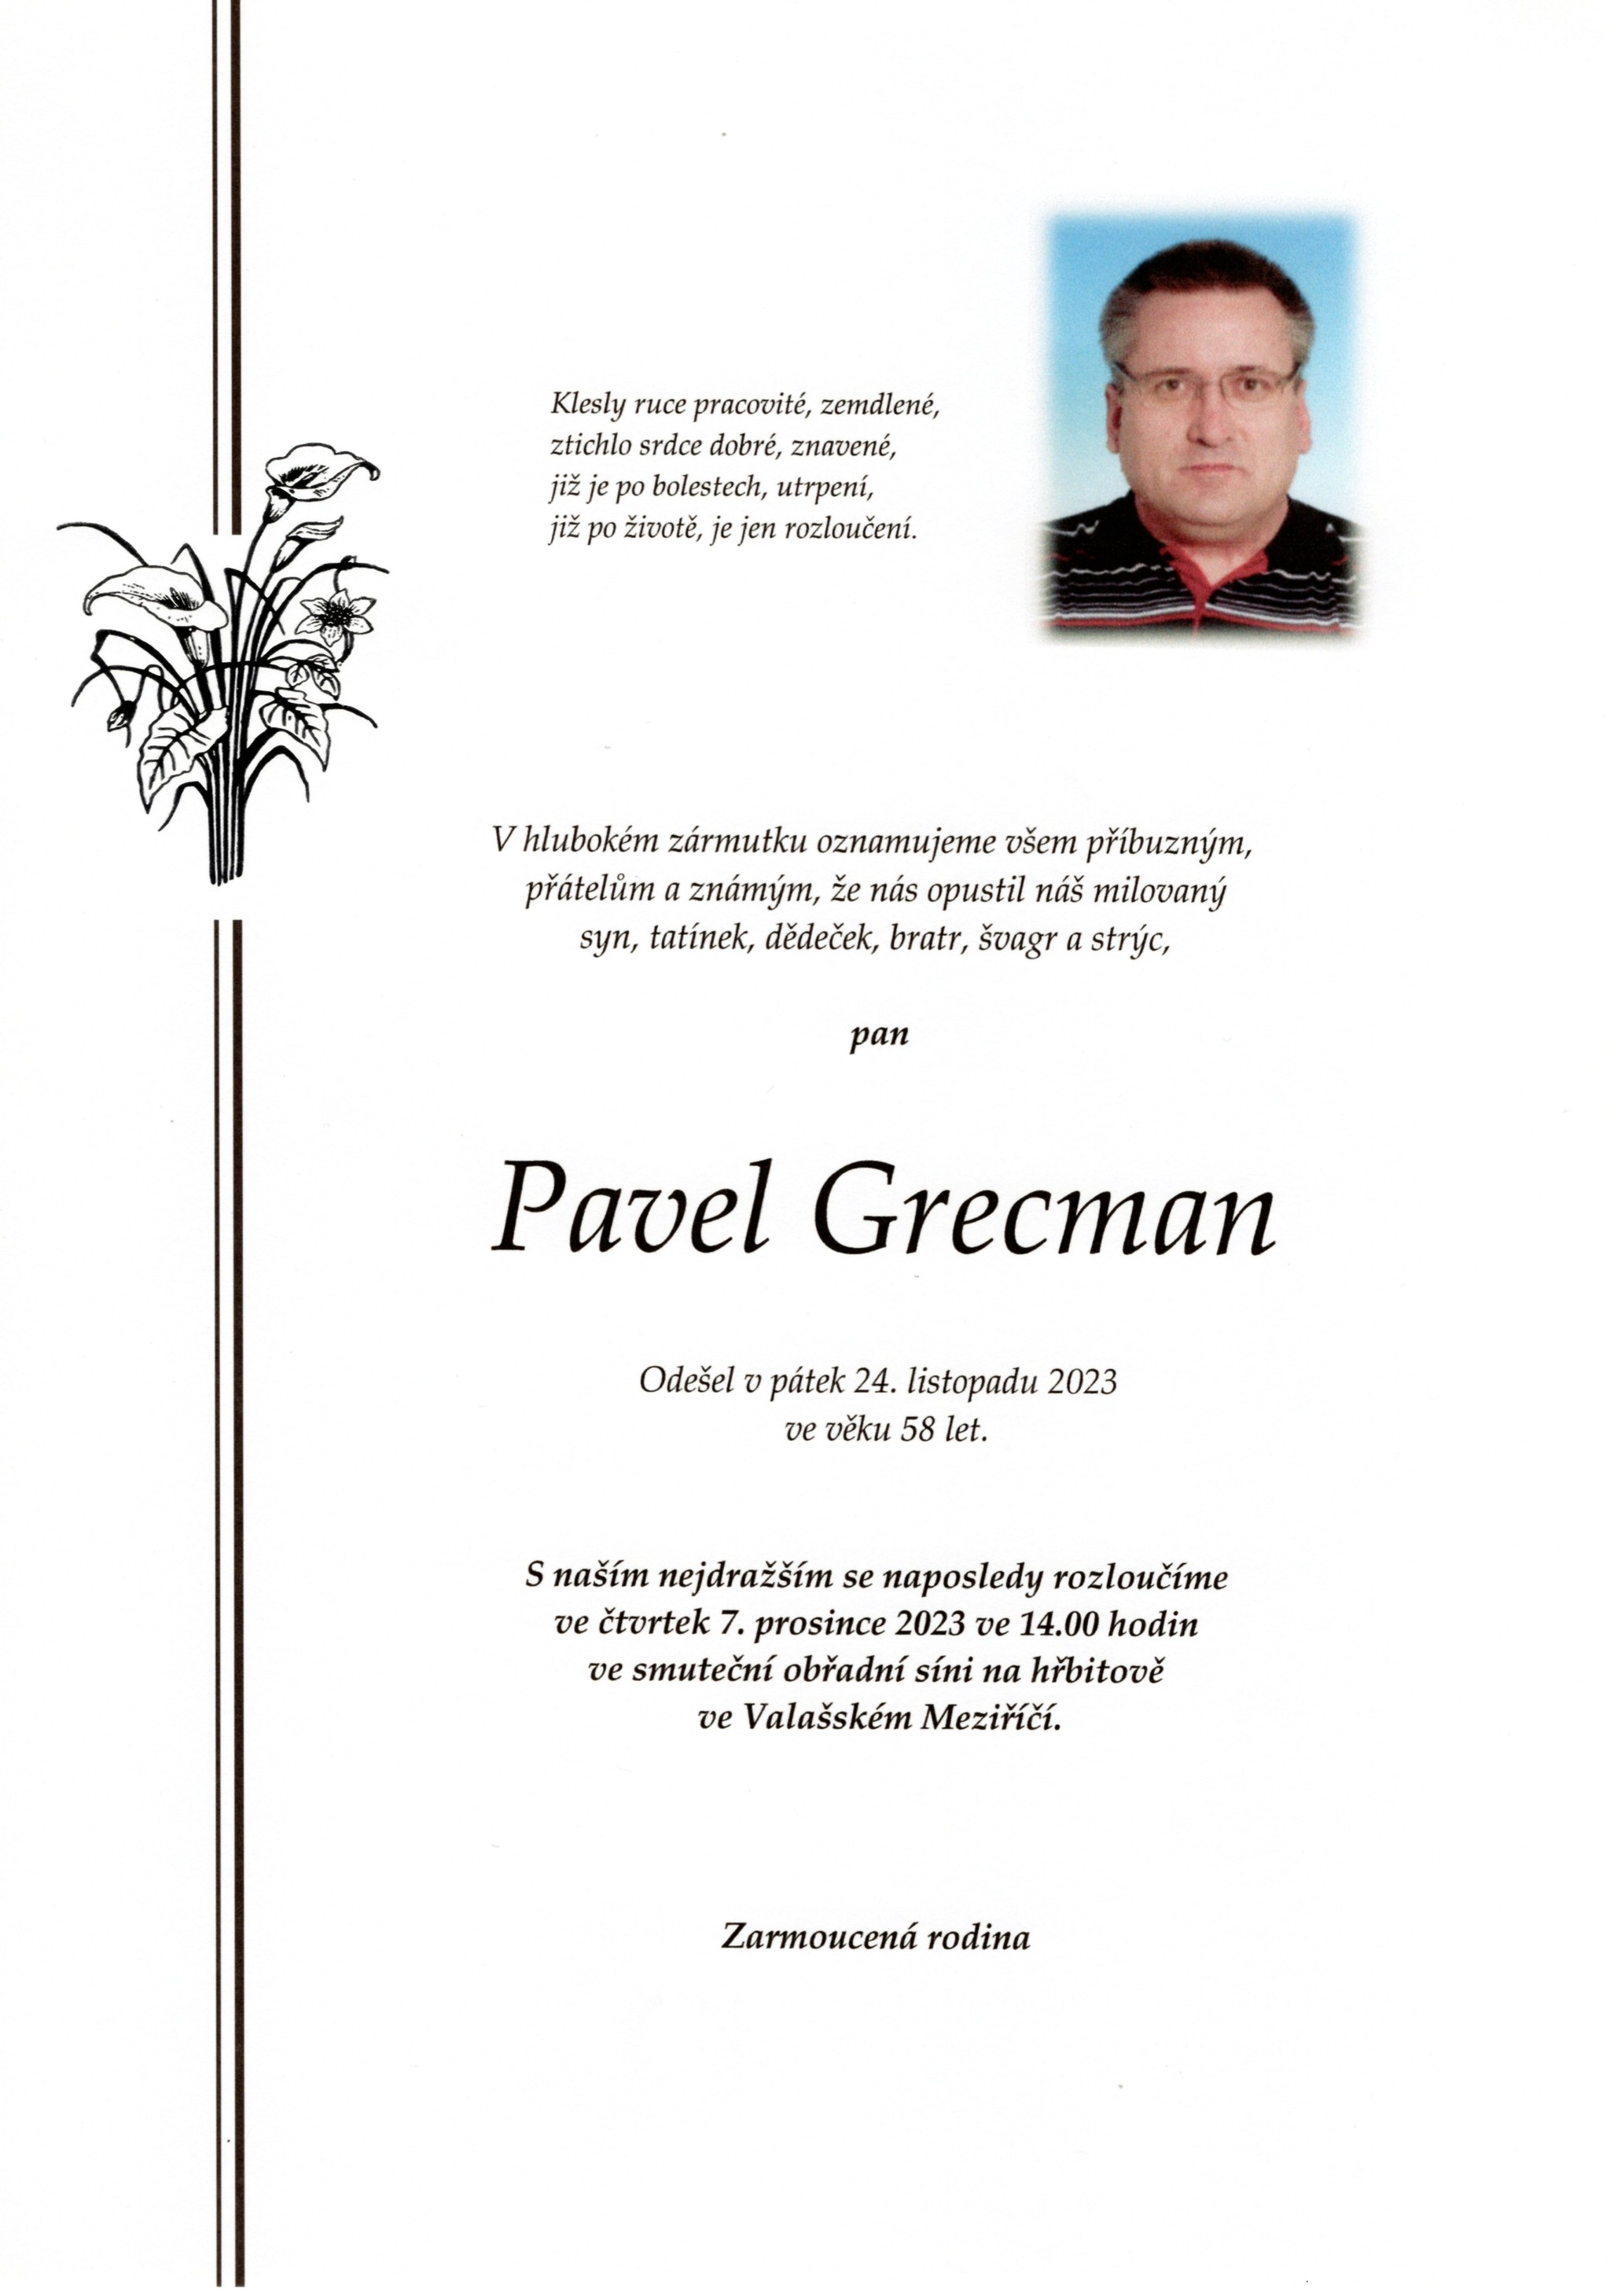 Pavel Grecman